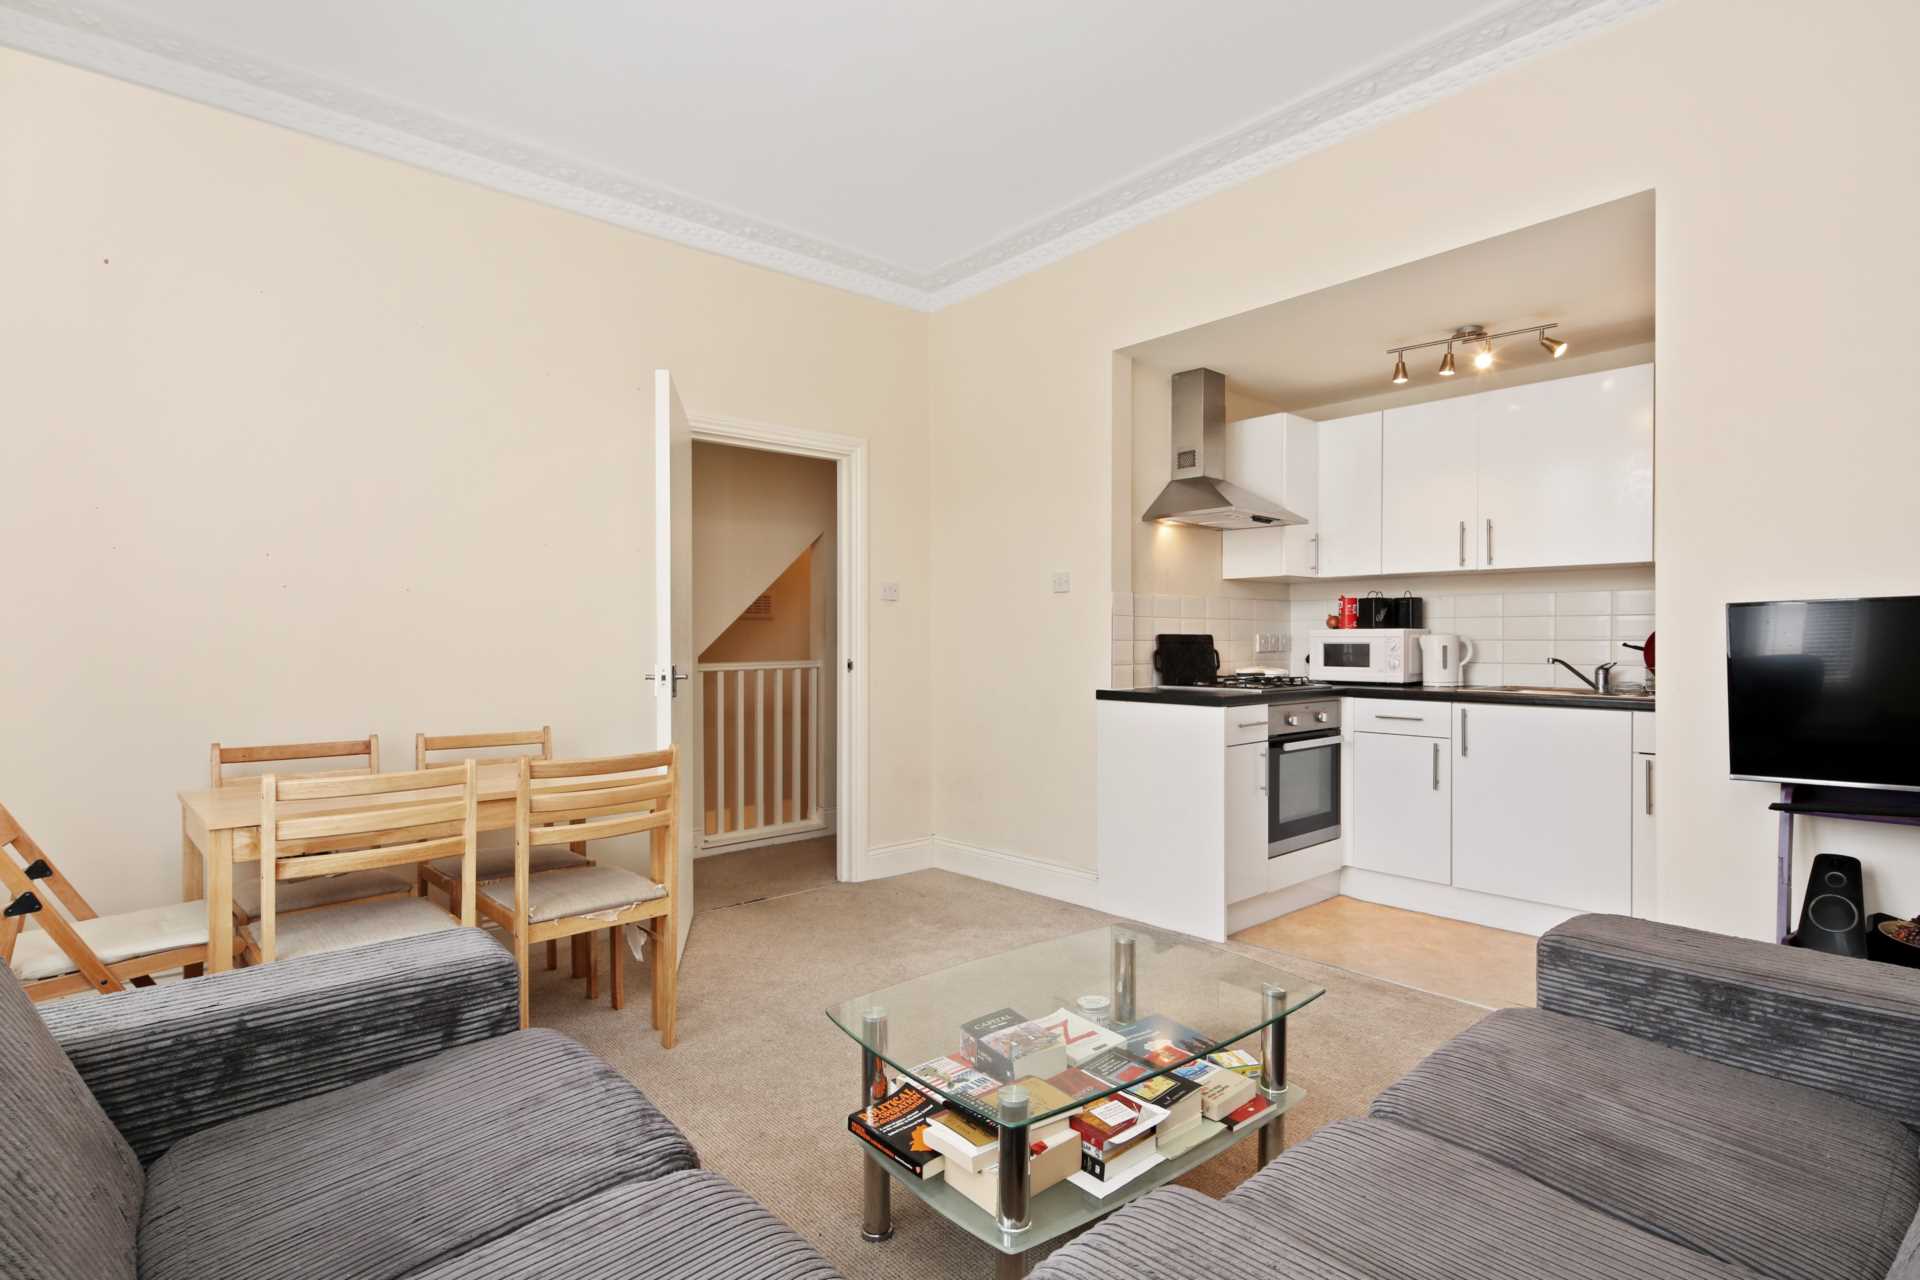 3 bed Maisonette for rent in London. From Amber & Co - Uxbridge Road